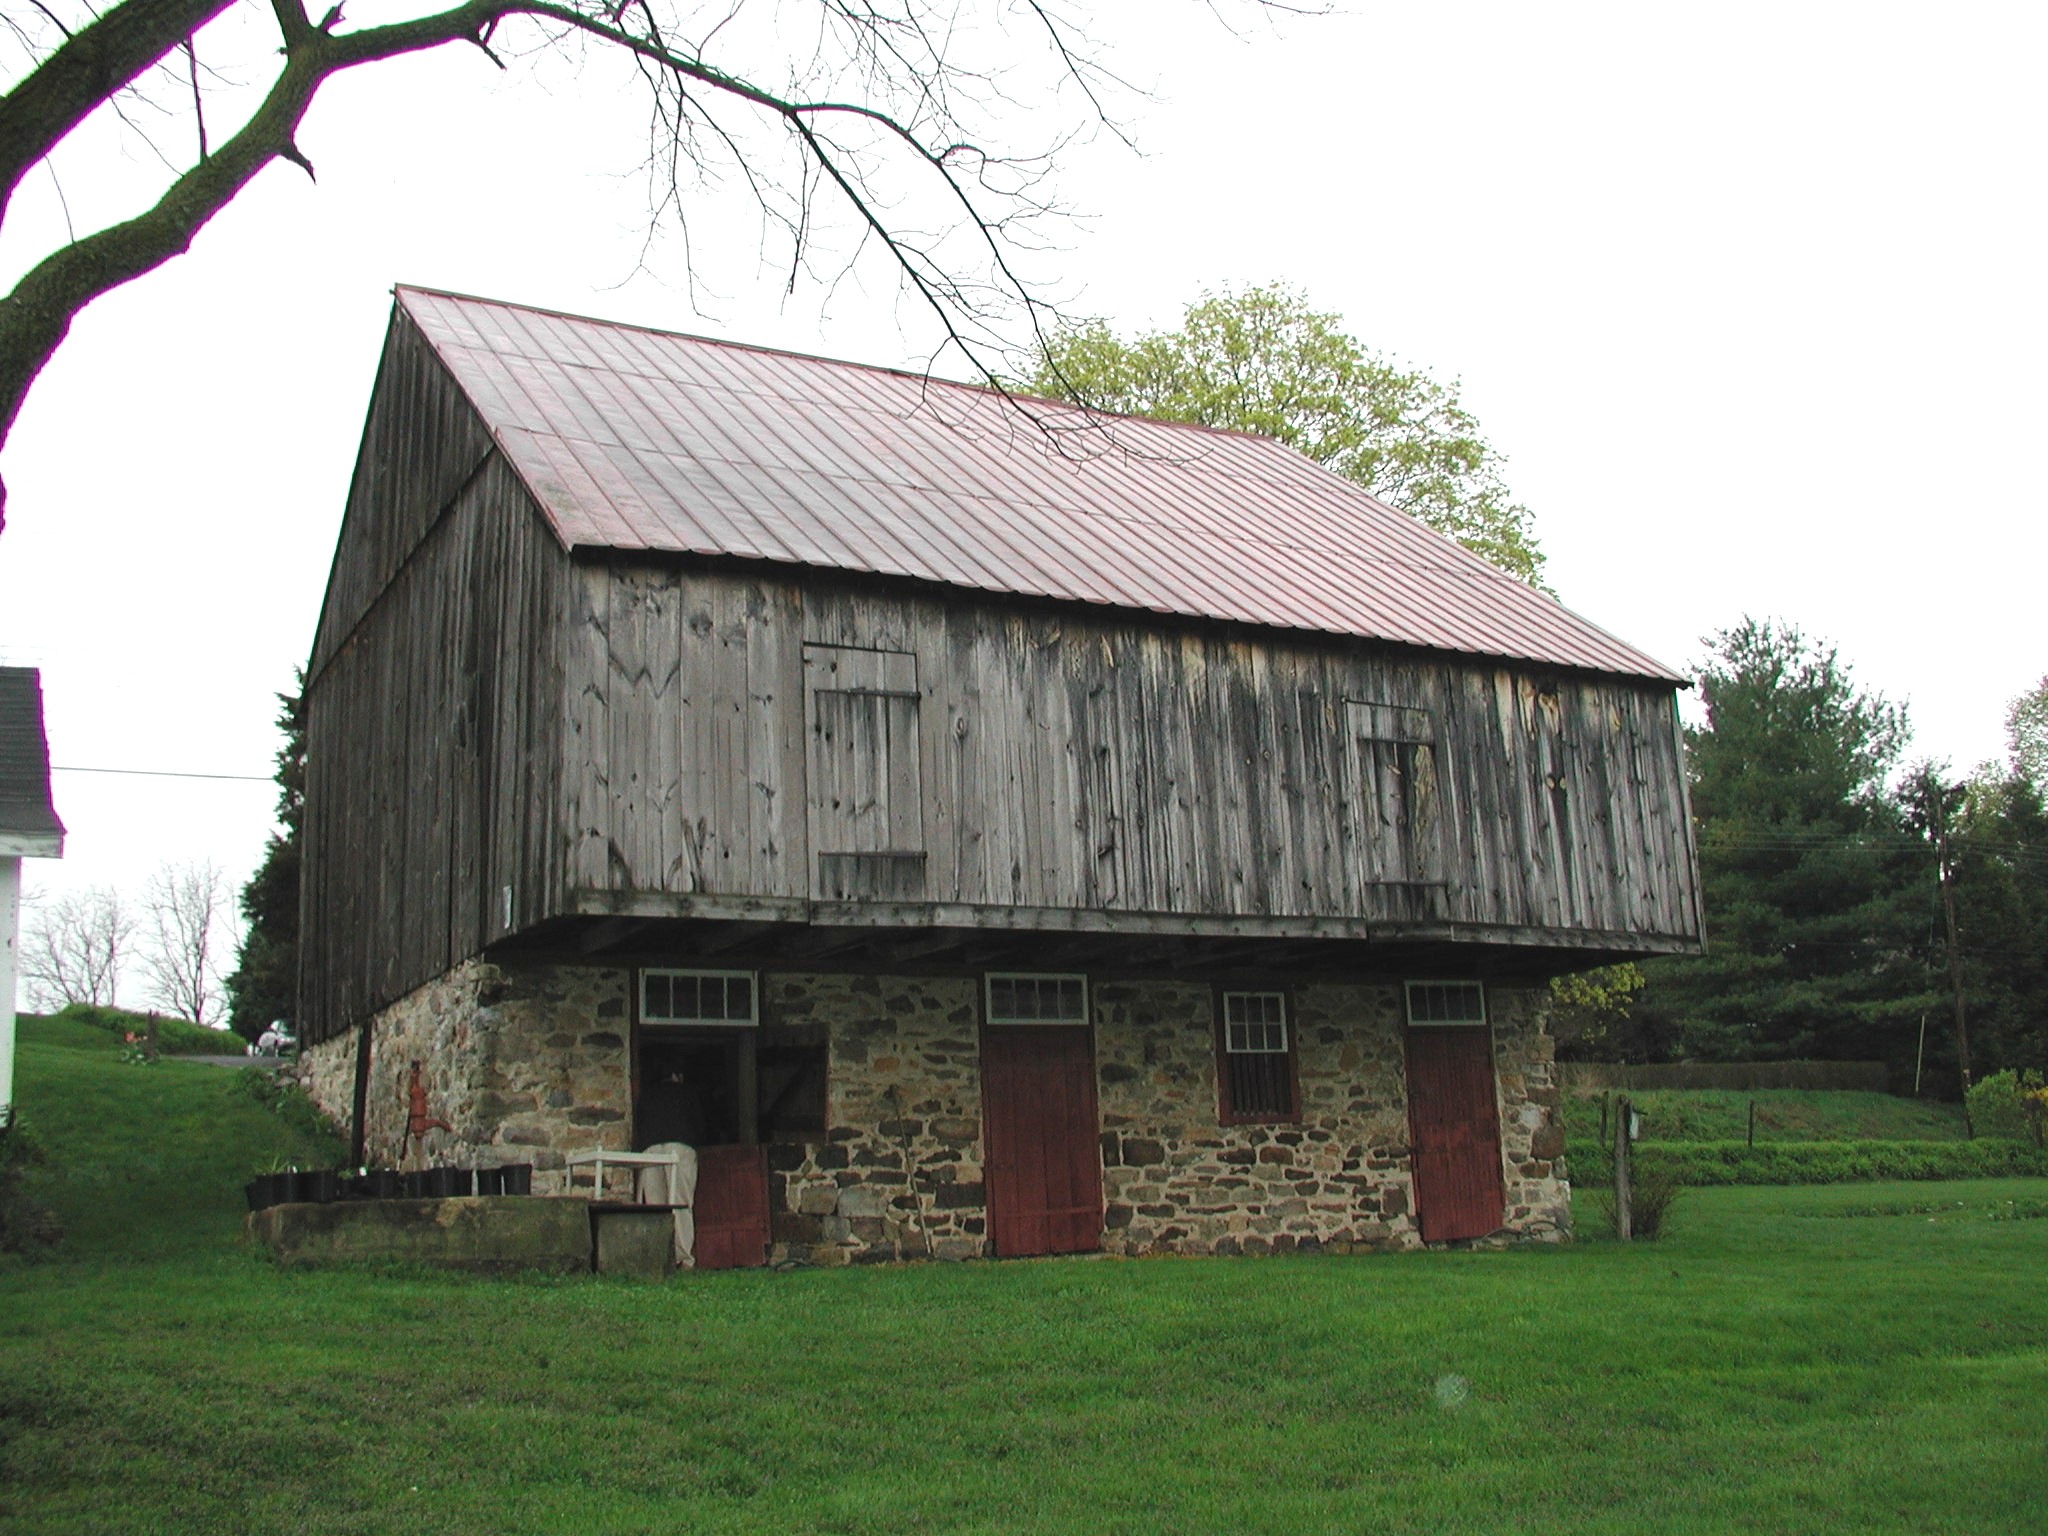 001 Pennsylvania Barn, Oley Valley, Berks County, c. 1820.jpg